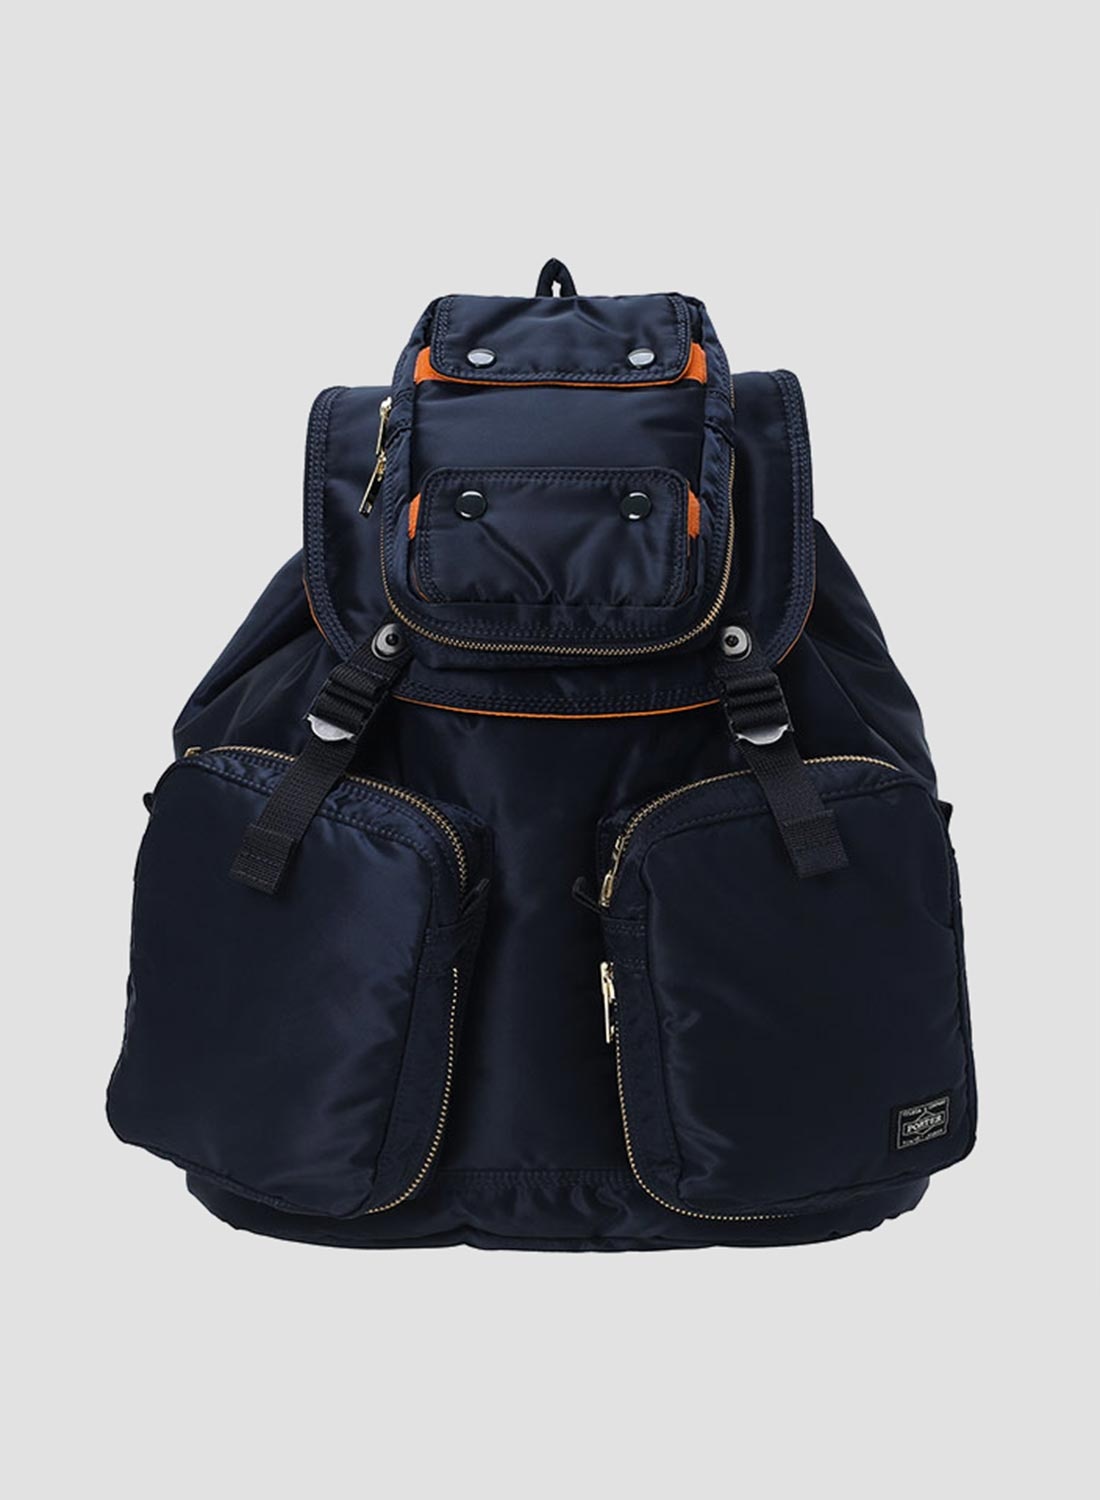 Porter-Yoshida & Co Tanker Backpack in Iron Blue - 2